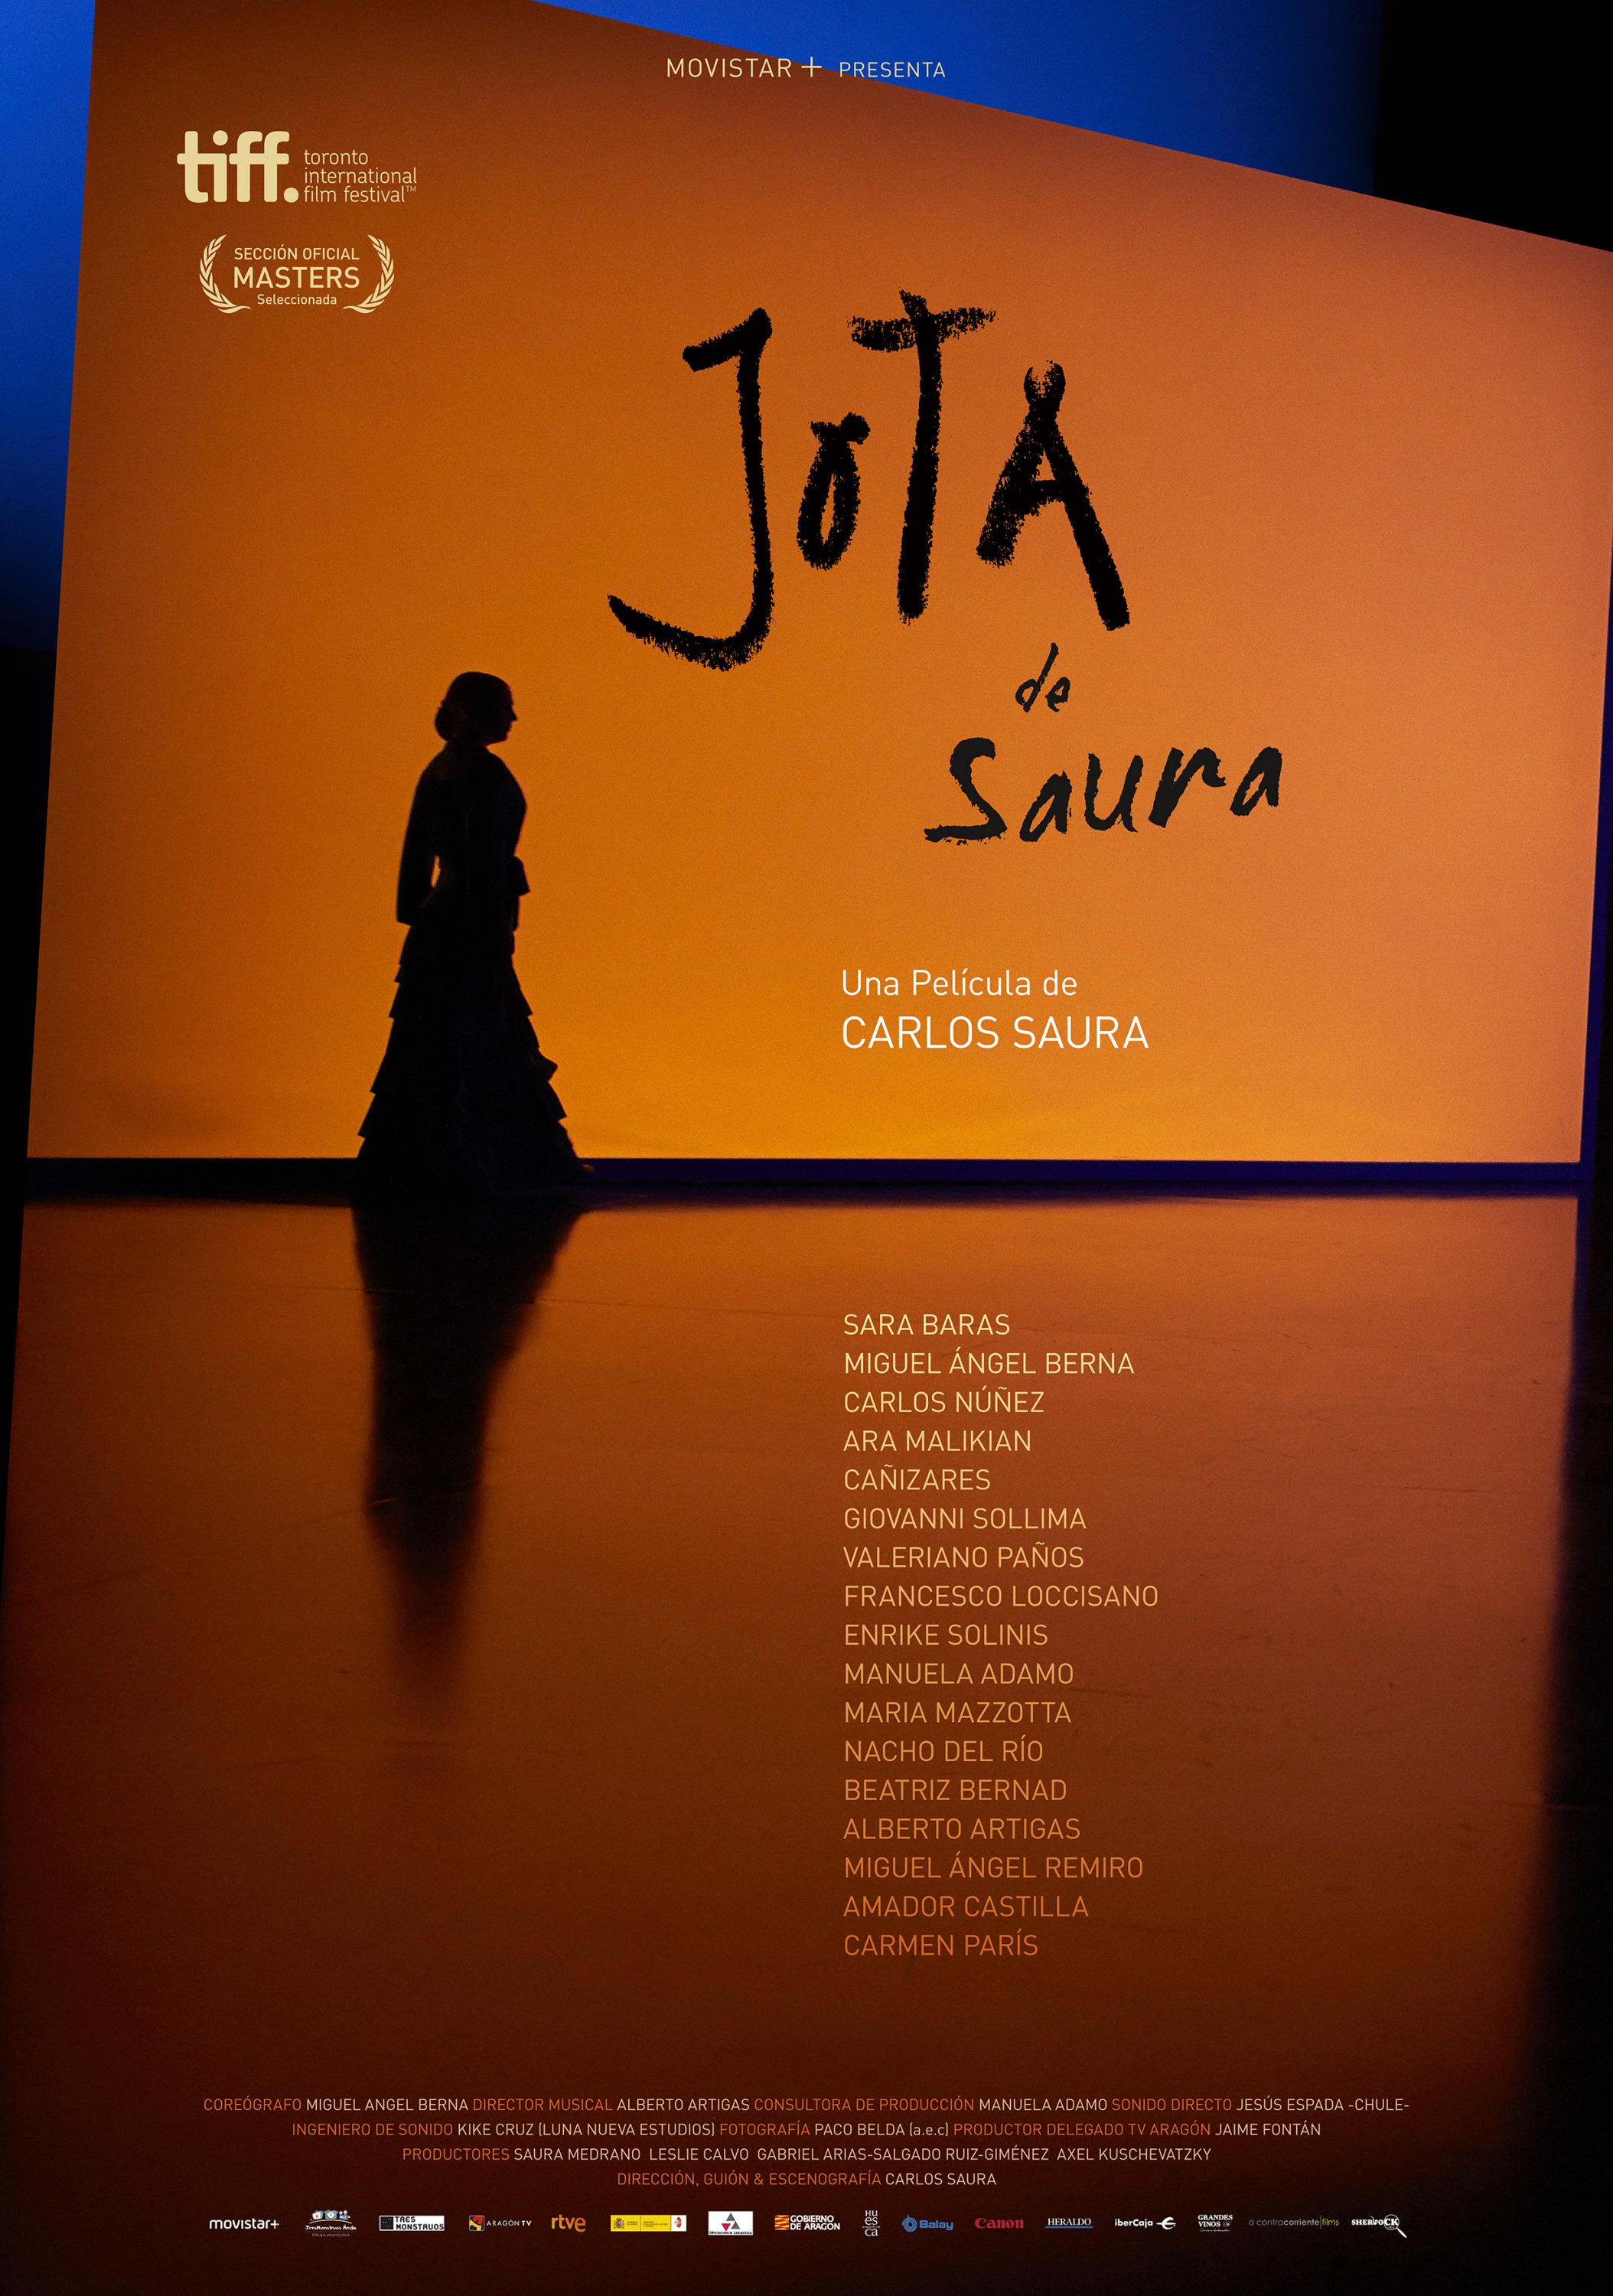 Mega Sized Movie Poster Image for Jota de Saura 